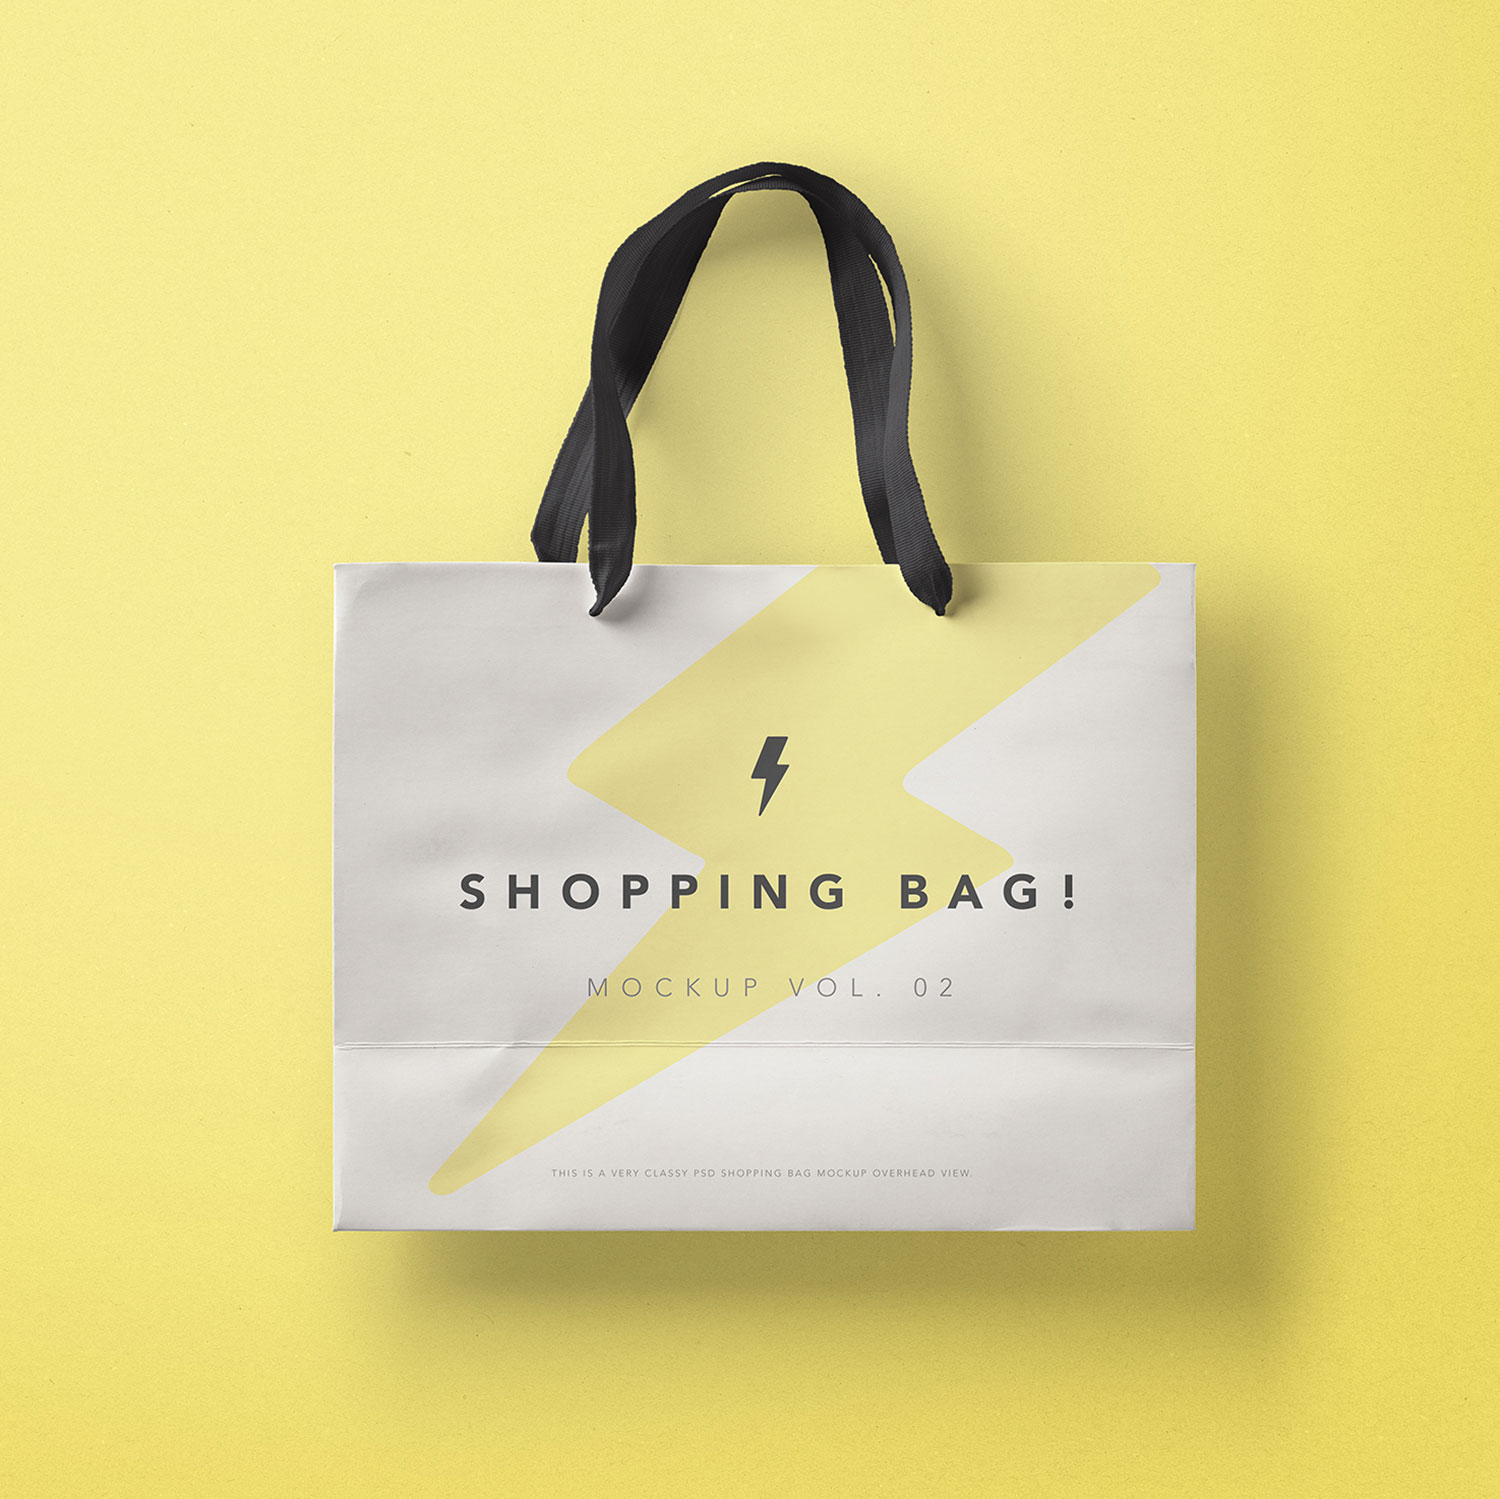 Shopping bag design